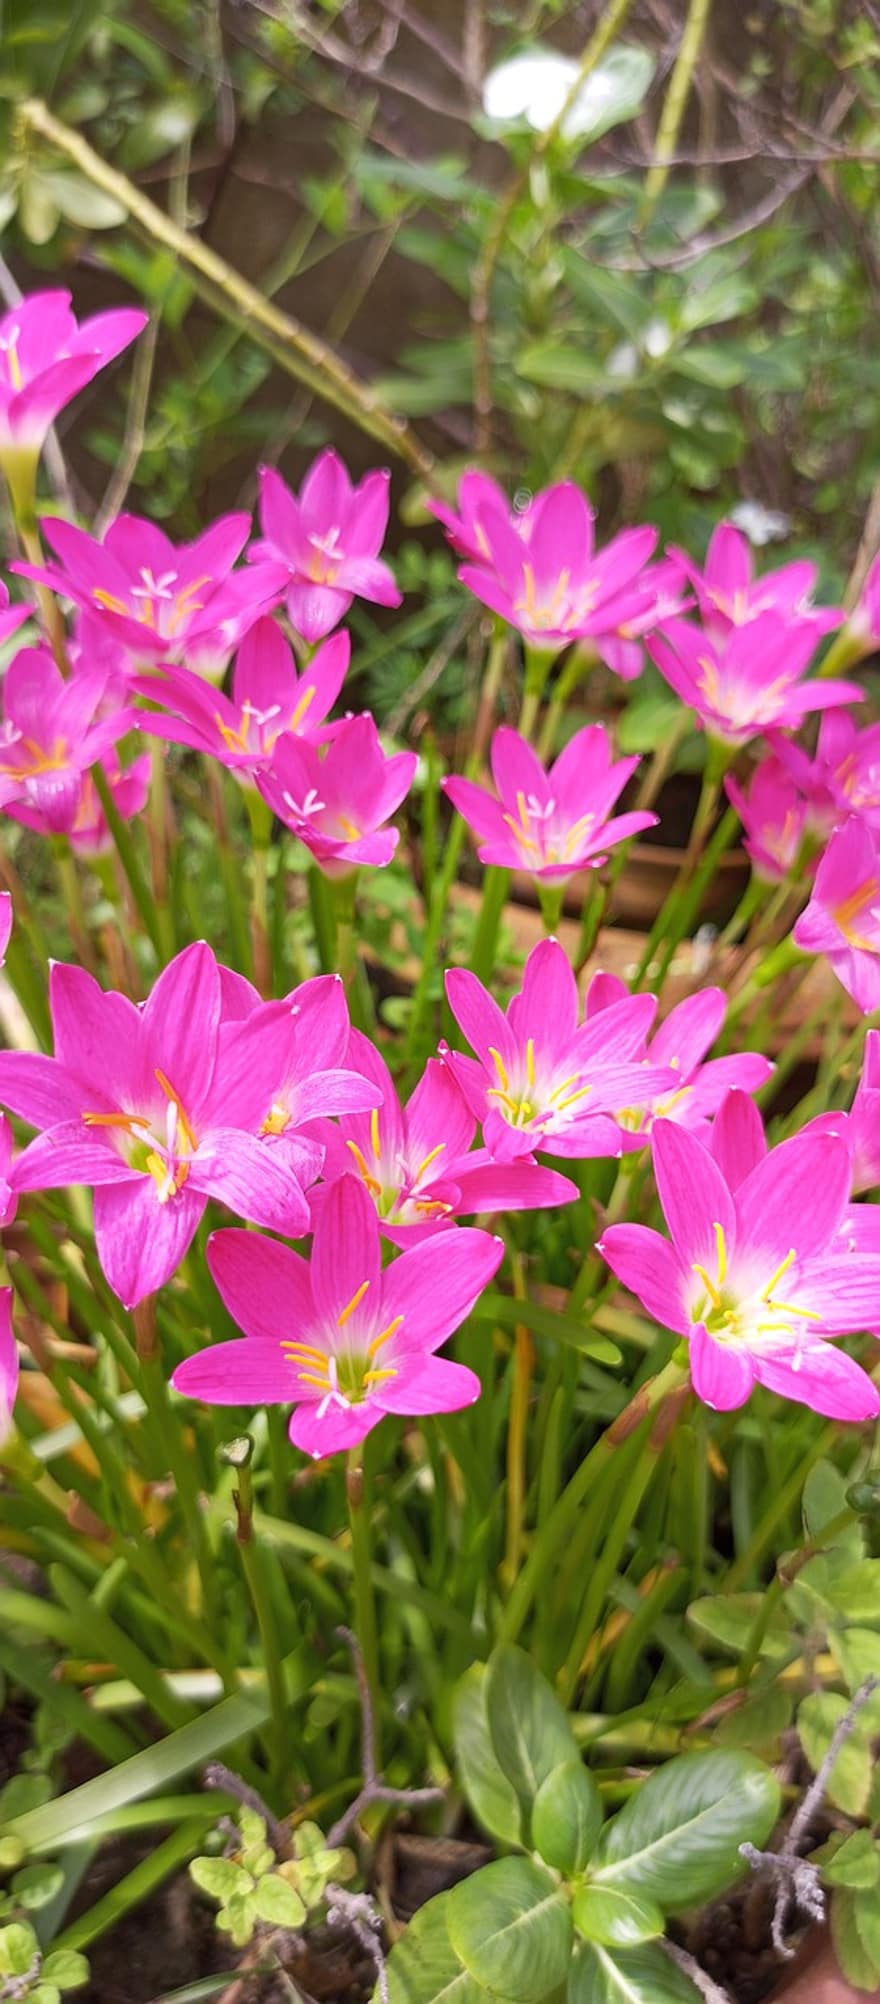 Lilies, Flowers, Garden, Pink Flowers, Petals, Pink Petals, Bloom, Blossom, Plants, Flora